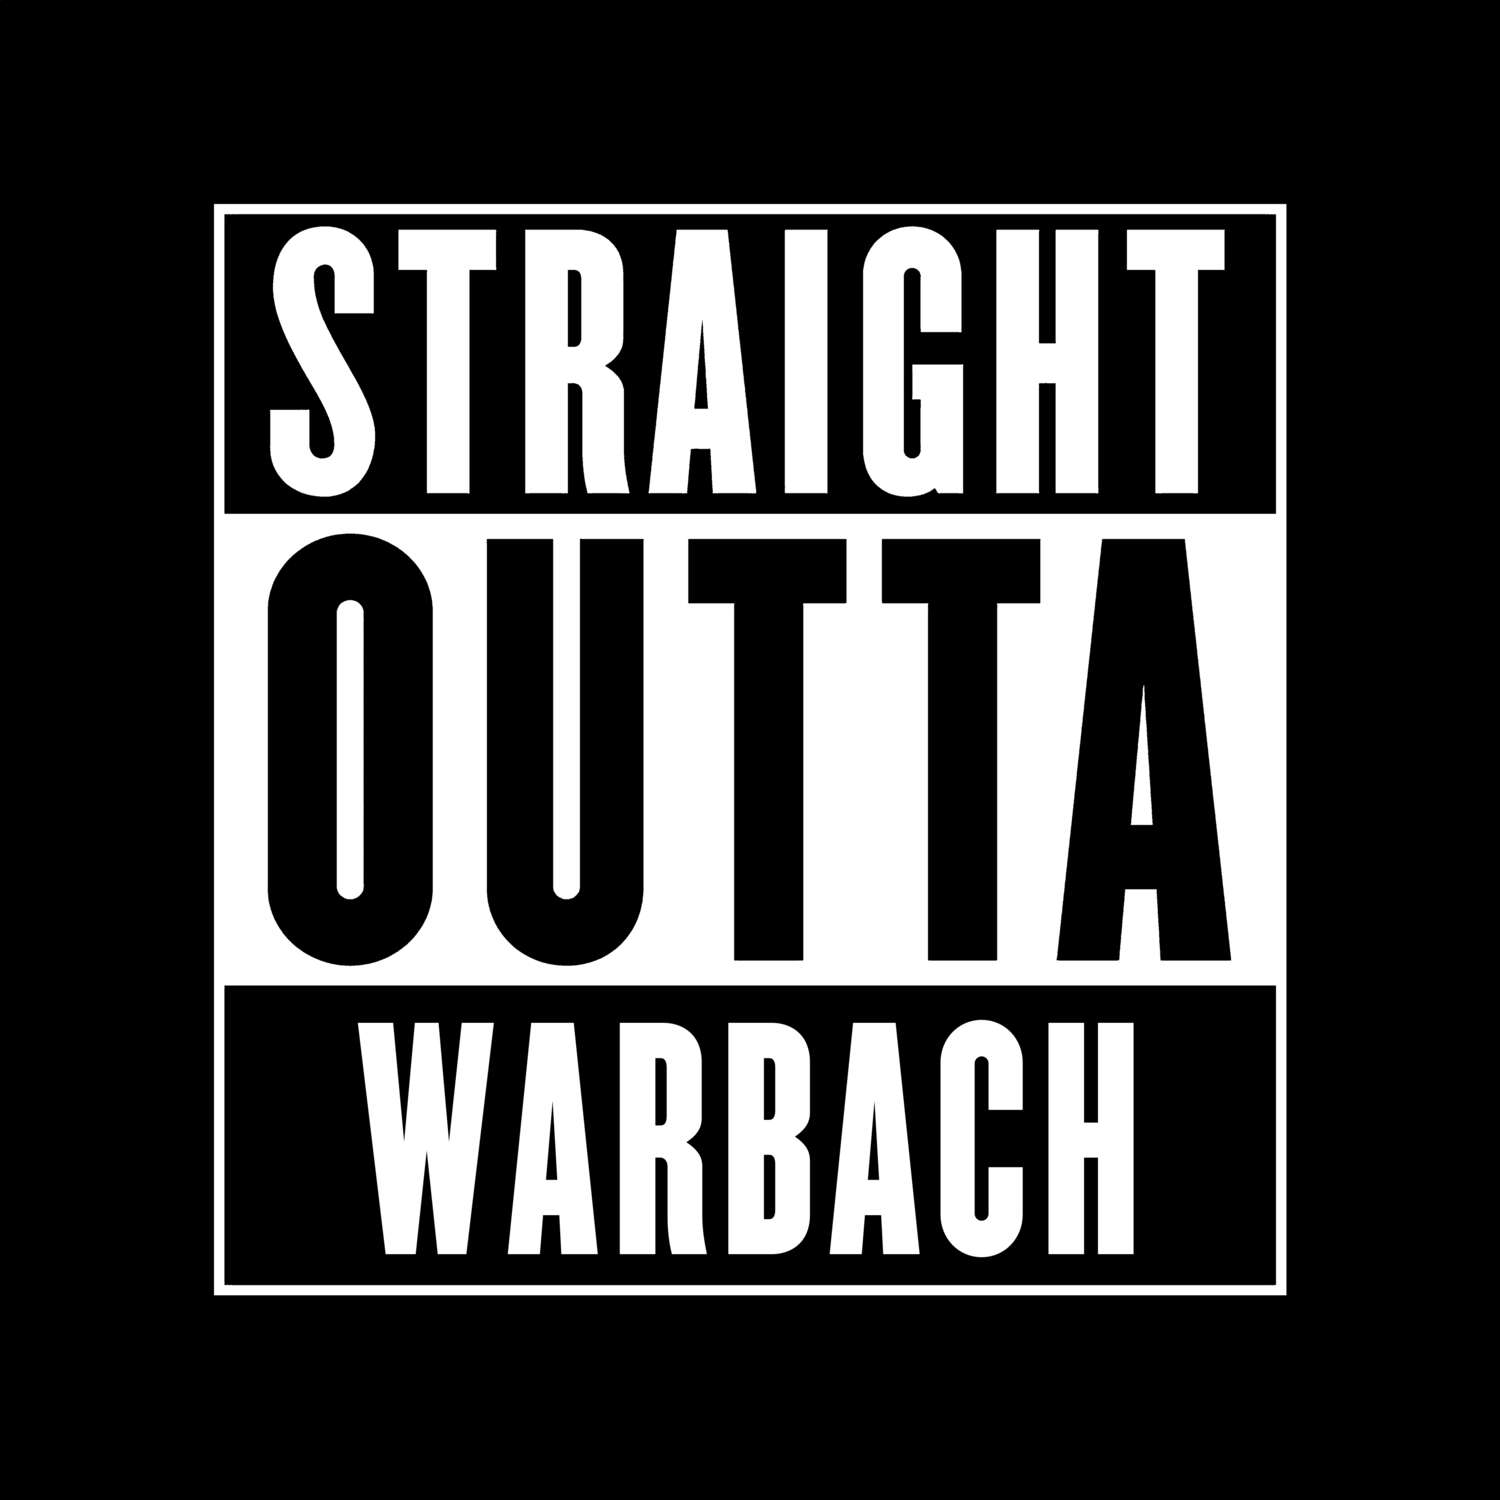 Warbach T-Shirt »Straight Outta«